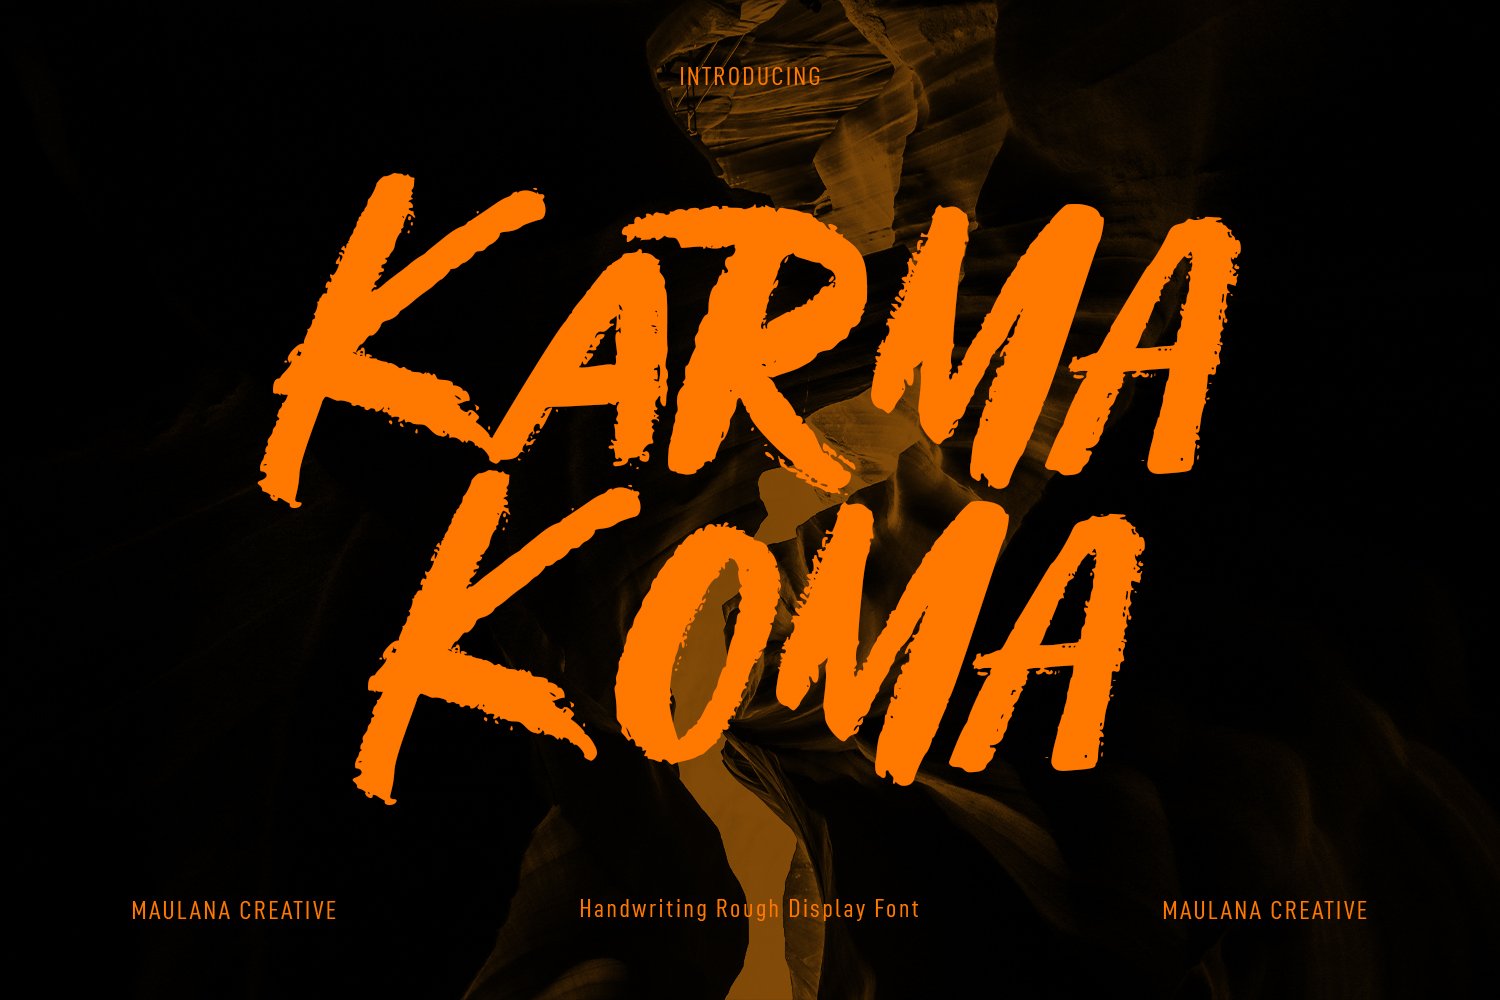 Karma Koma Handwritten Display Font cover image.